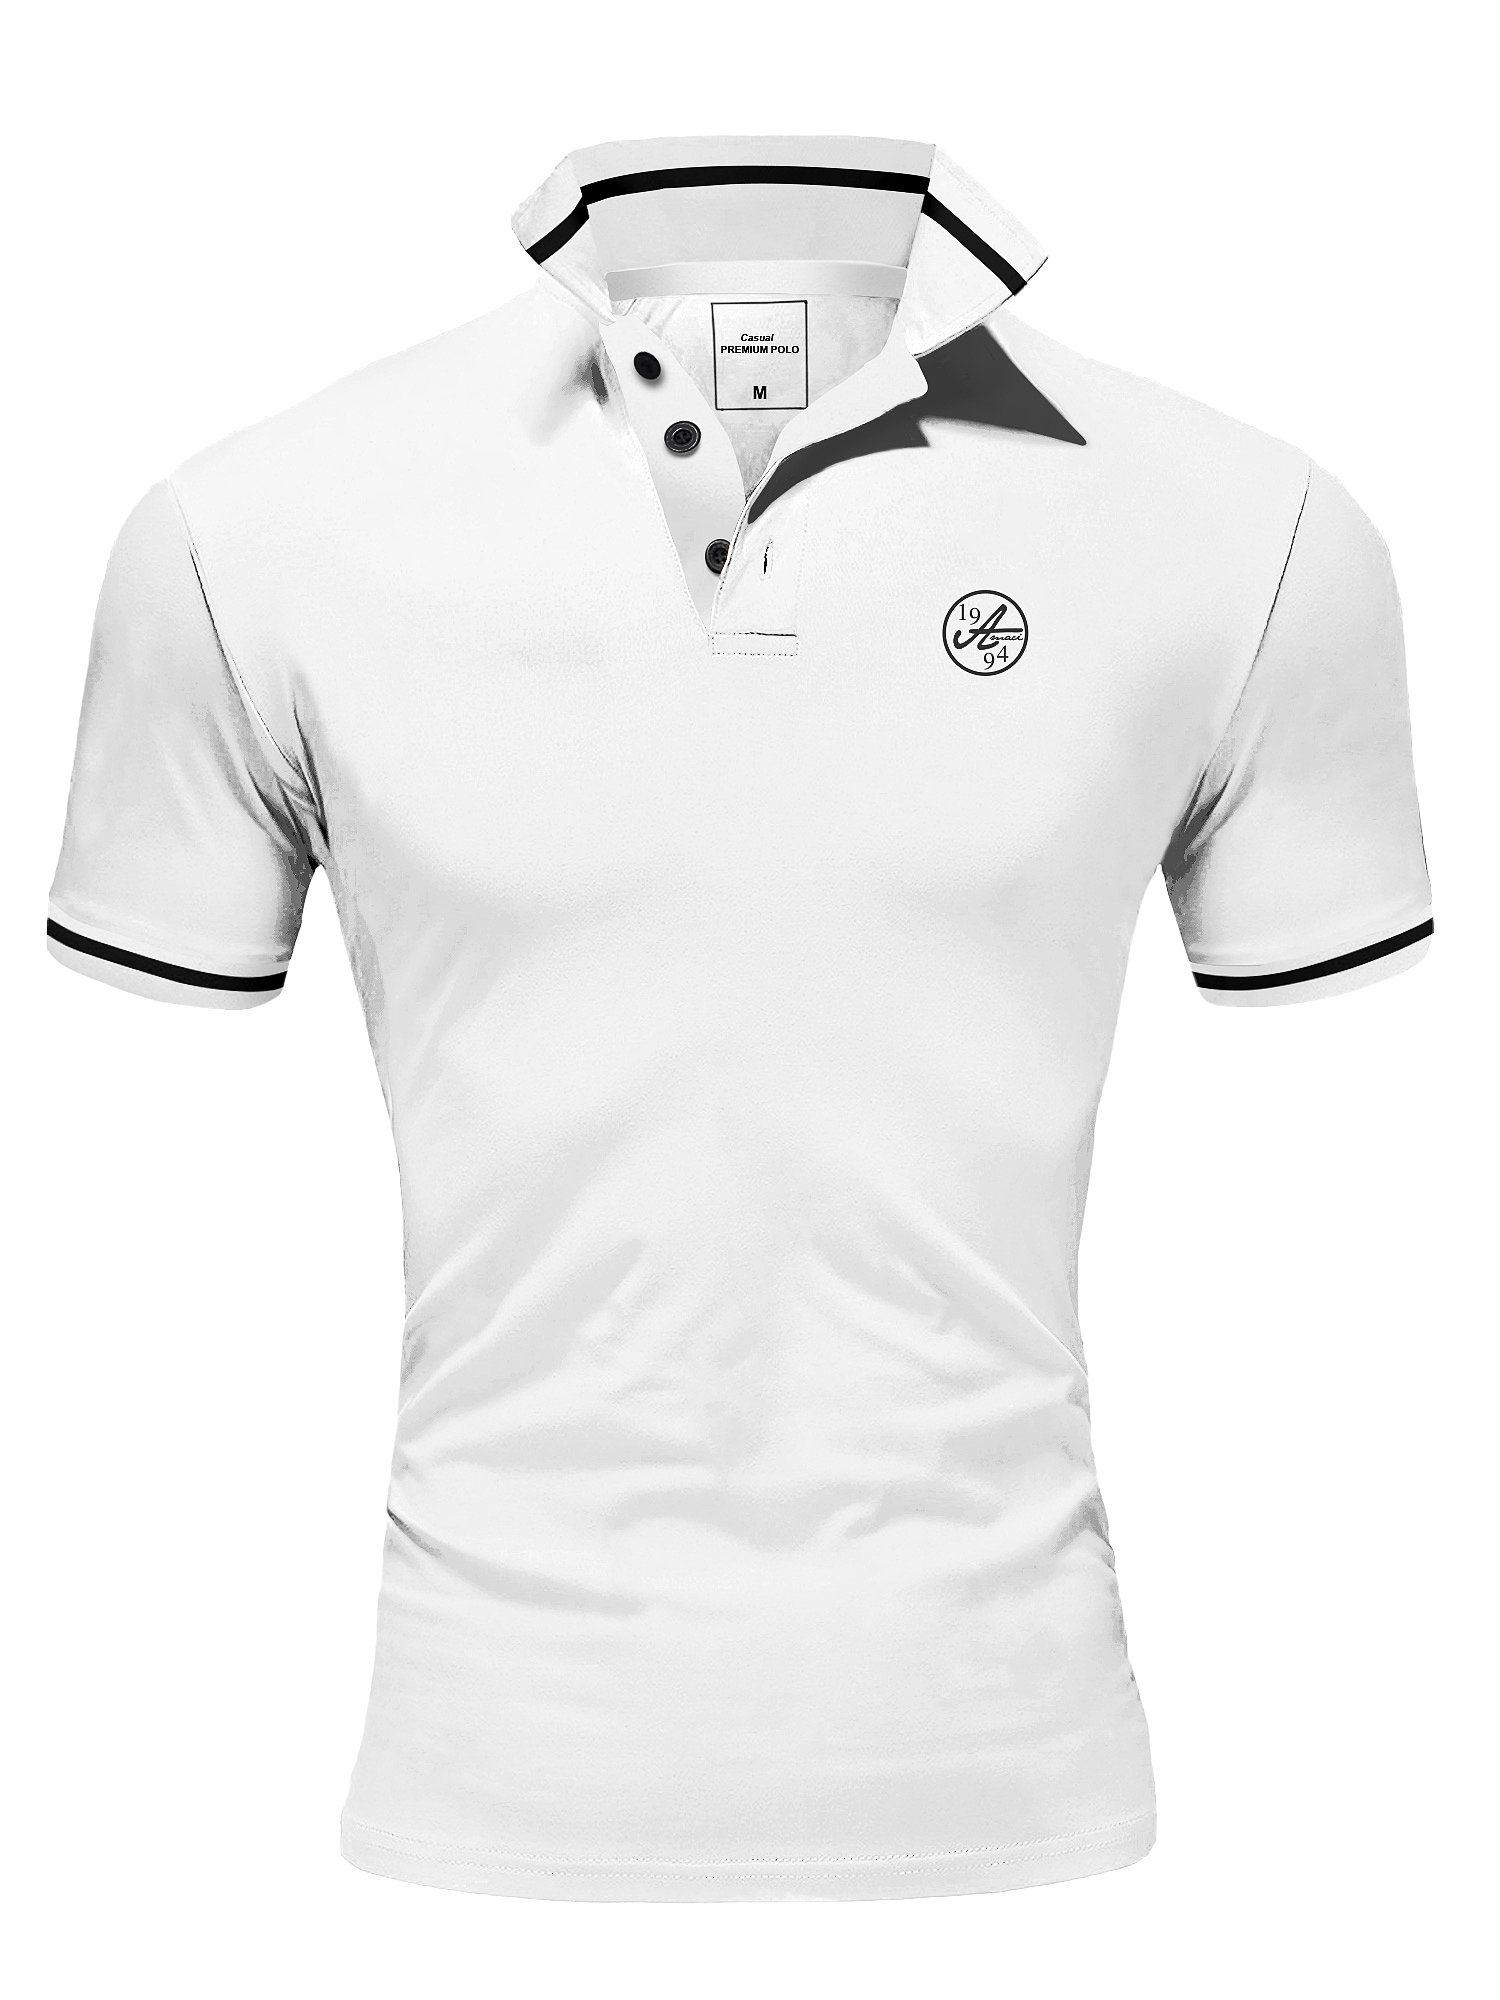 Amaci&Sons Poloshirt MACON Herren Basic Kontrast Stickerei Kurzarm Polohemd T-Shirt Weiß/Schwarz